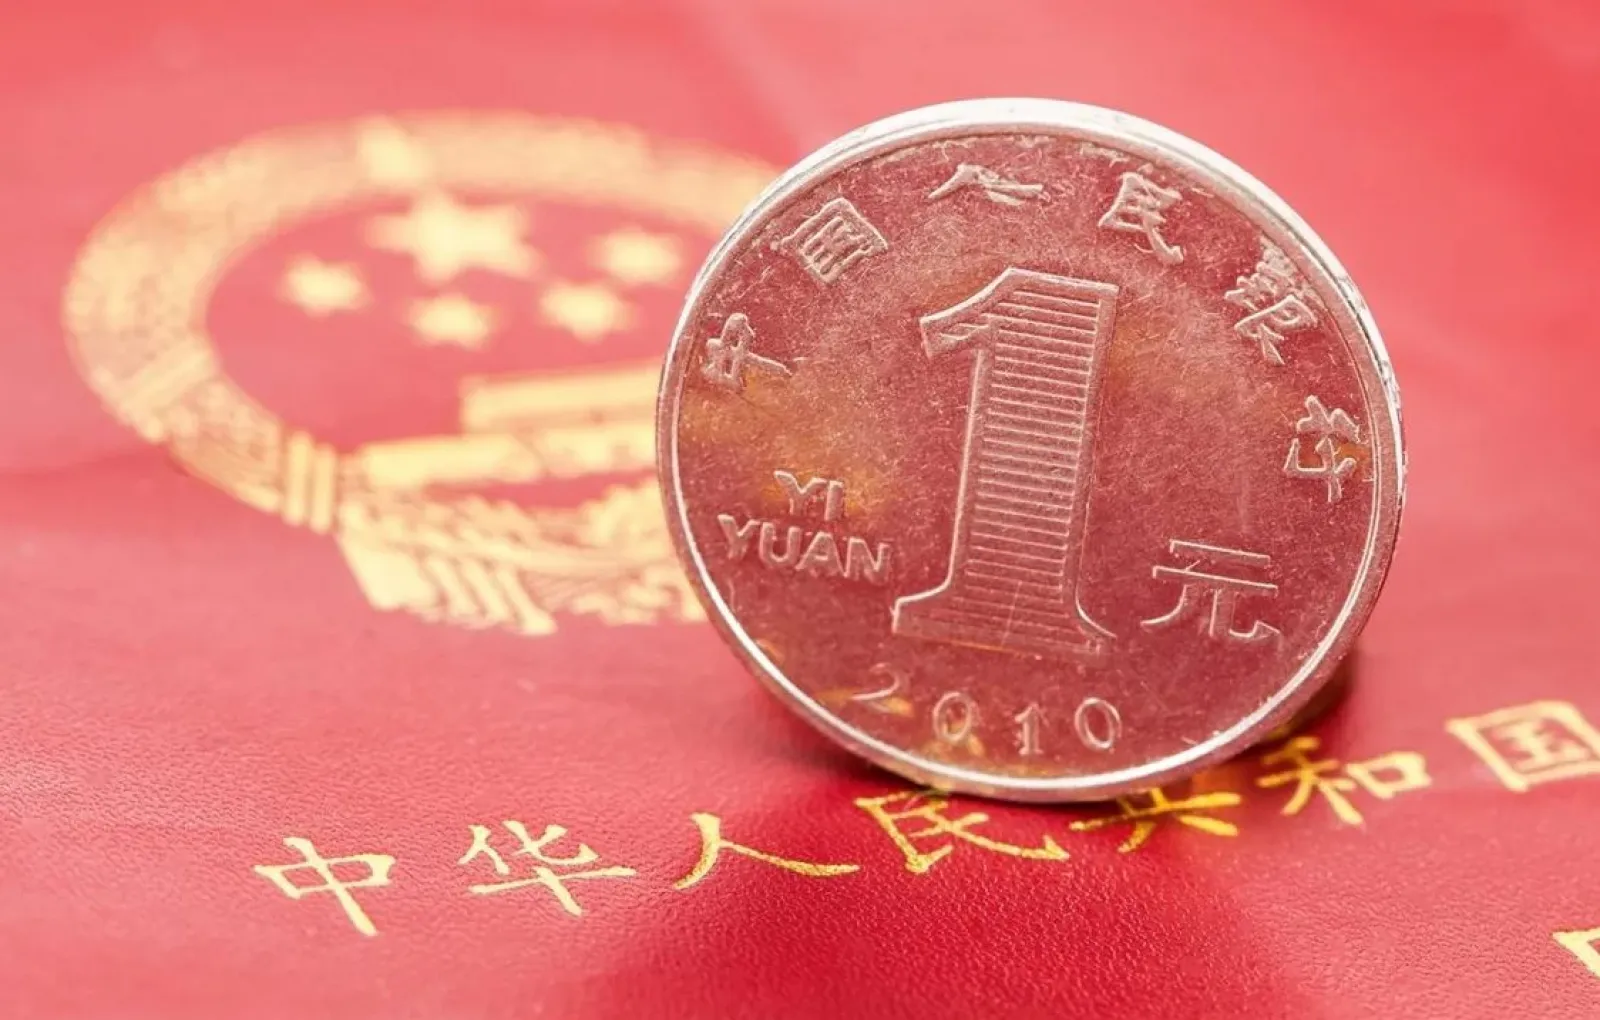 New currency. Нац валюта Китая. Юань. Китайский юань. Китайские деньги юань.